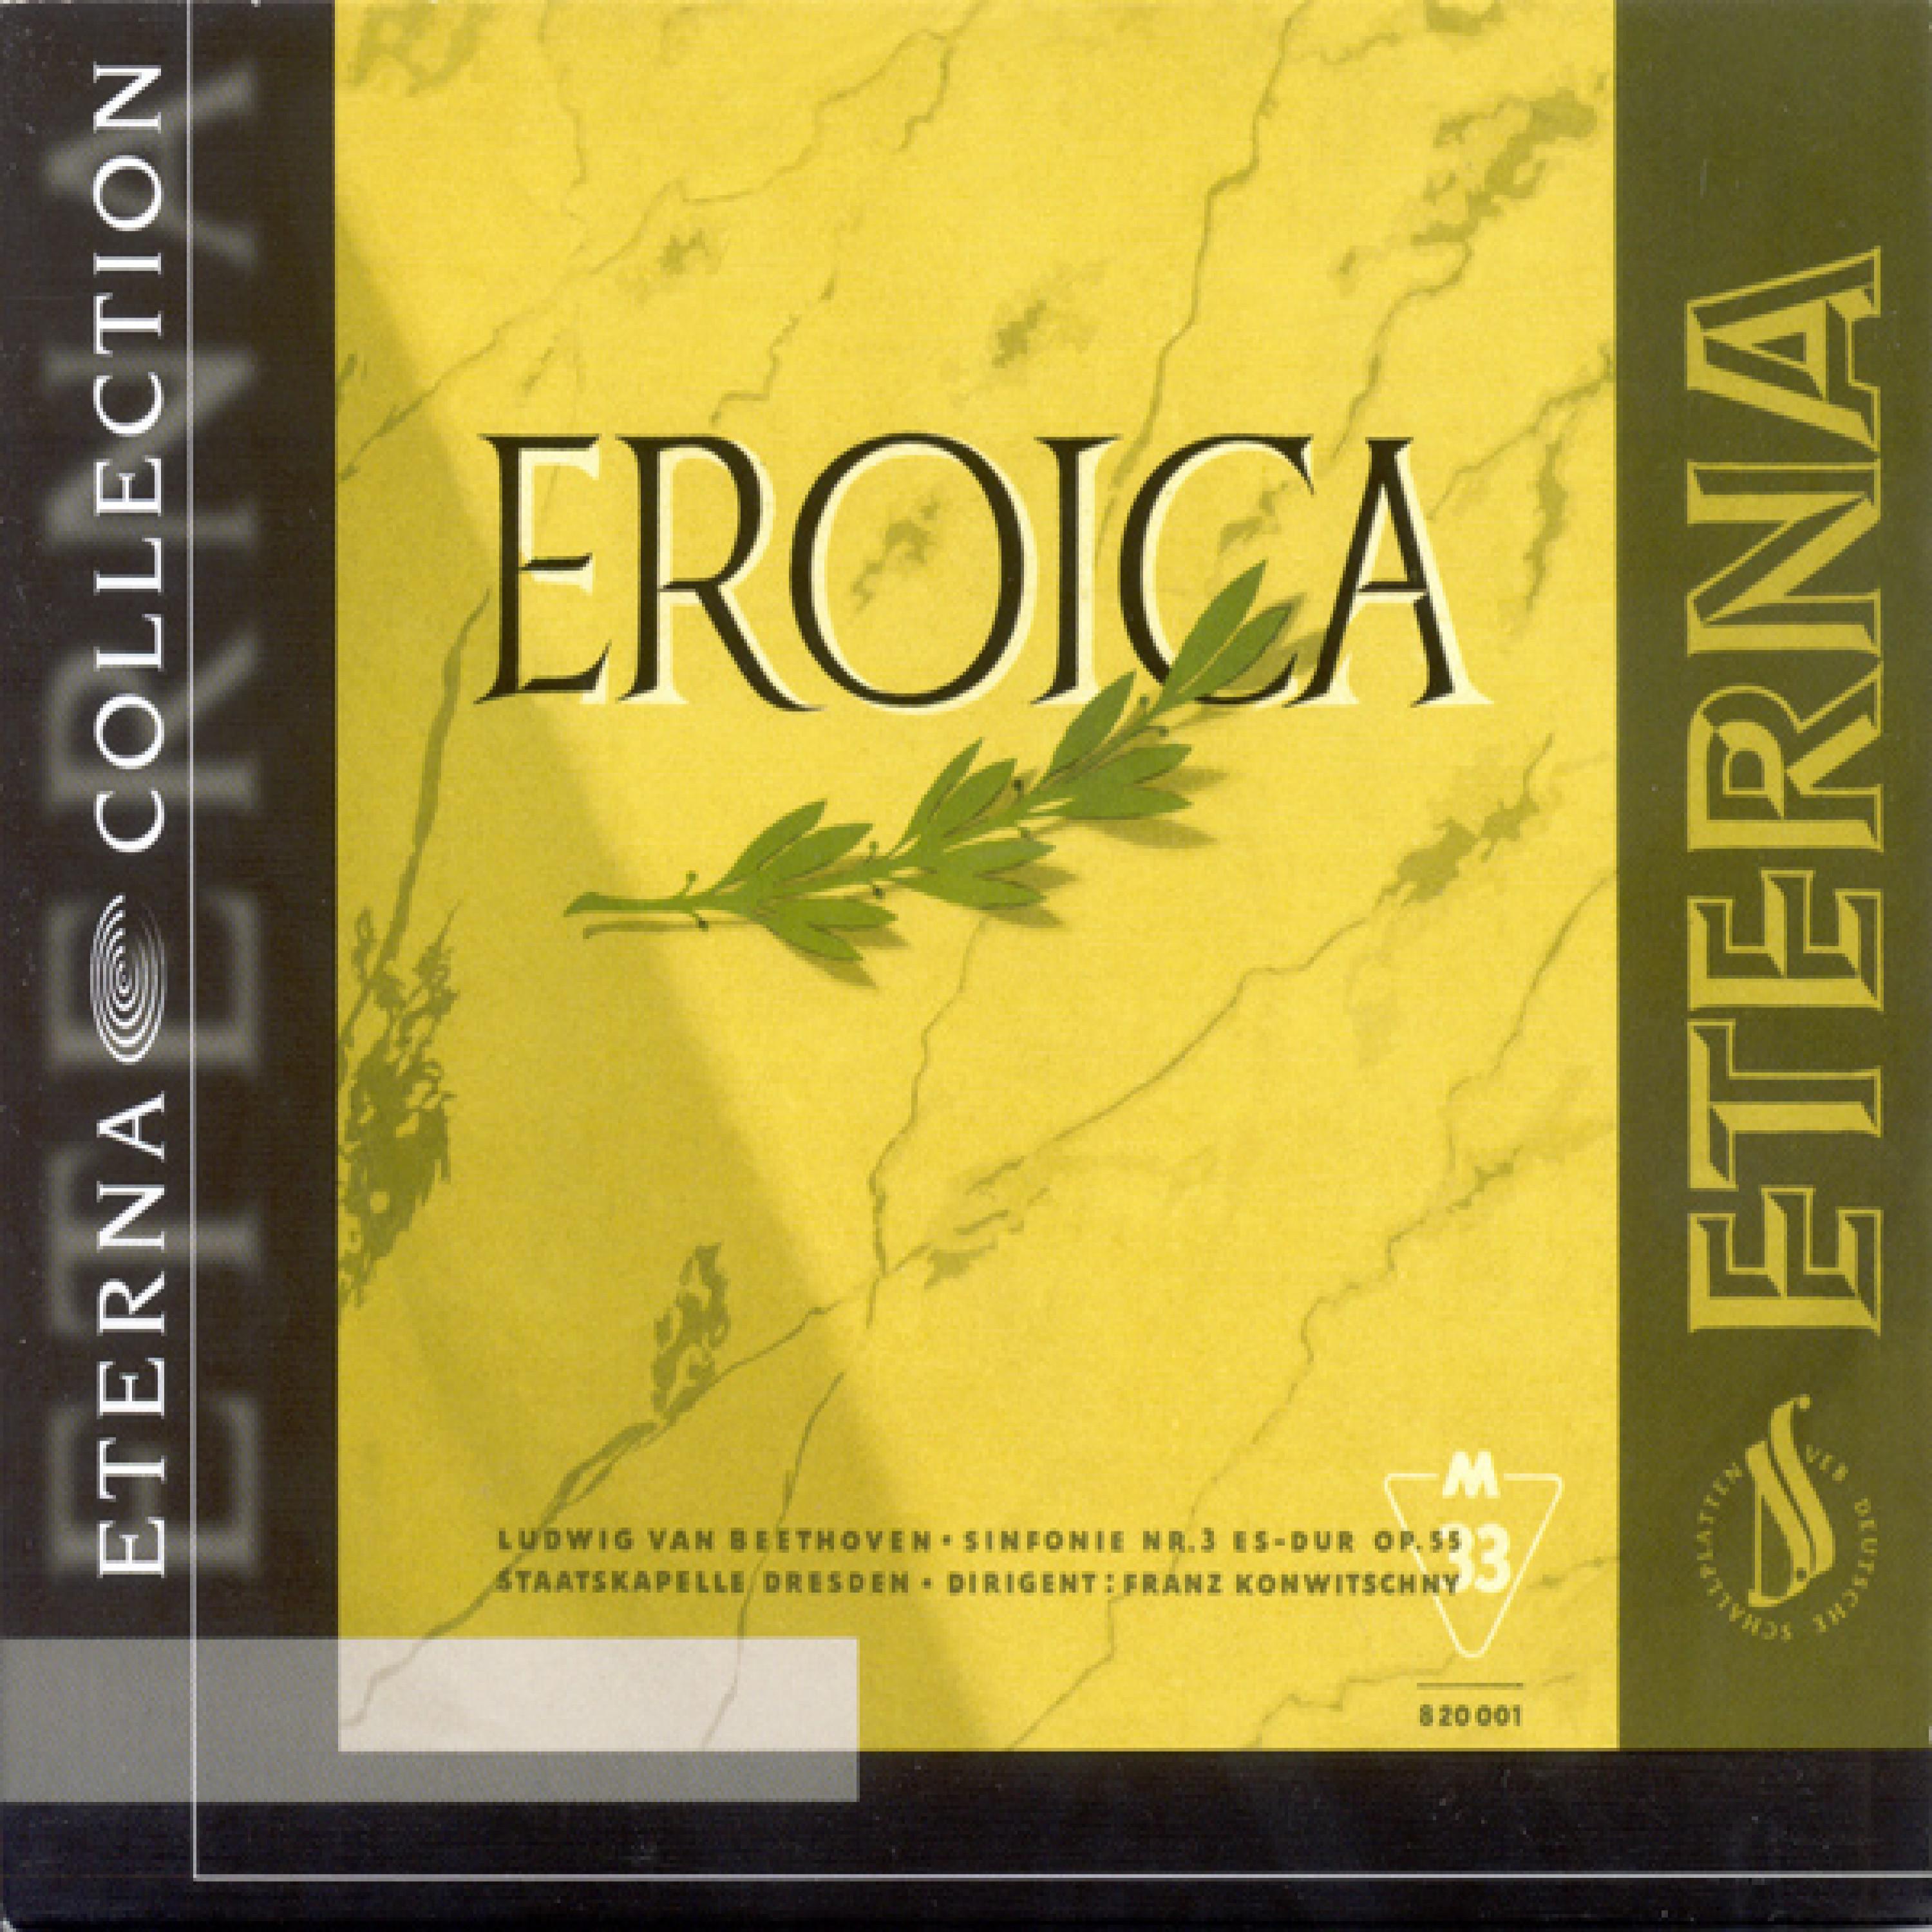 Symphony No. 3 in E flat major, Op. 55, "Eroica": II. Marcia funebre: Adagio assai